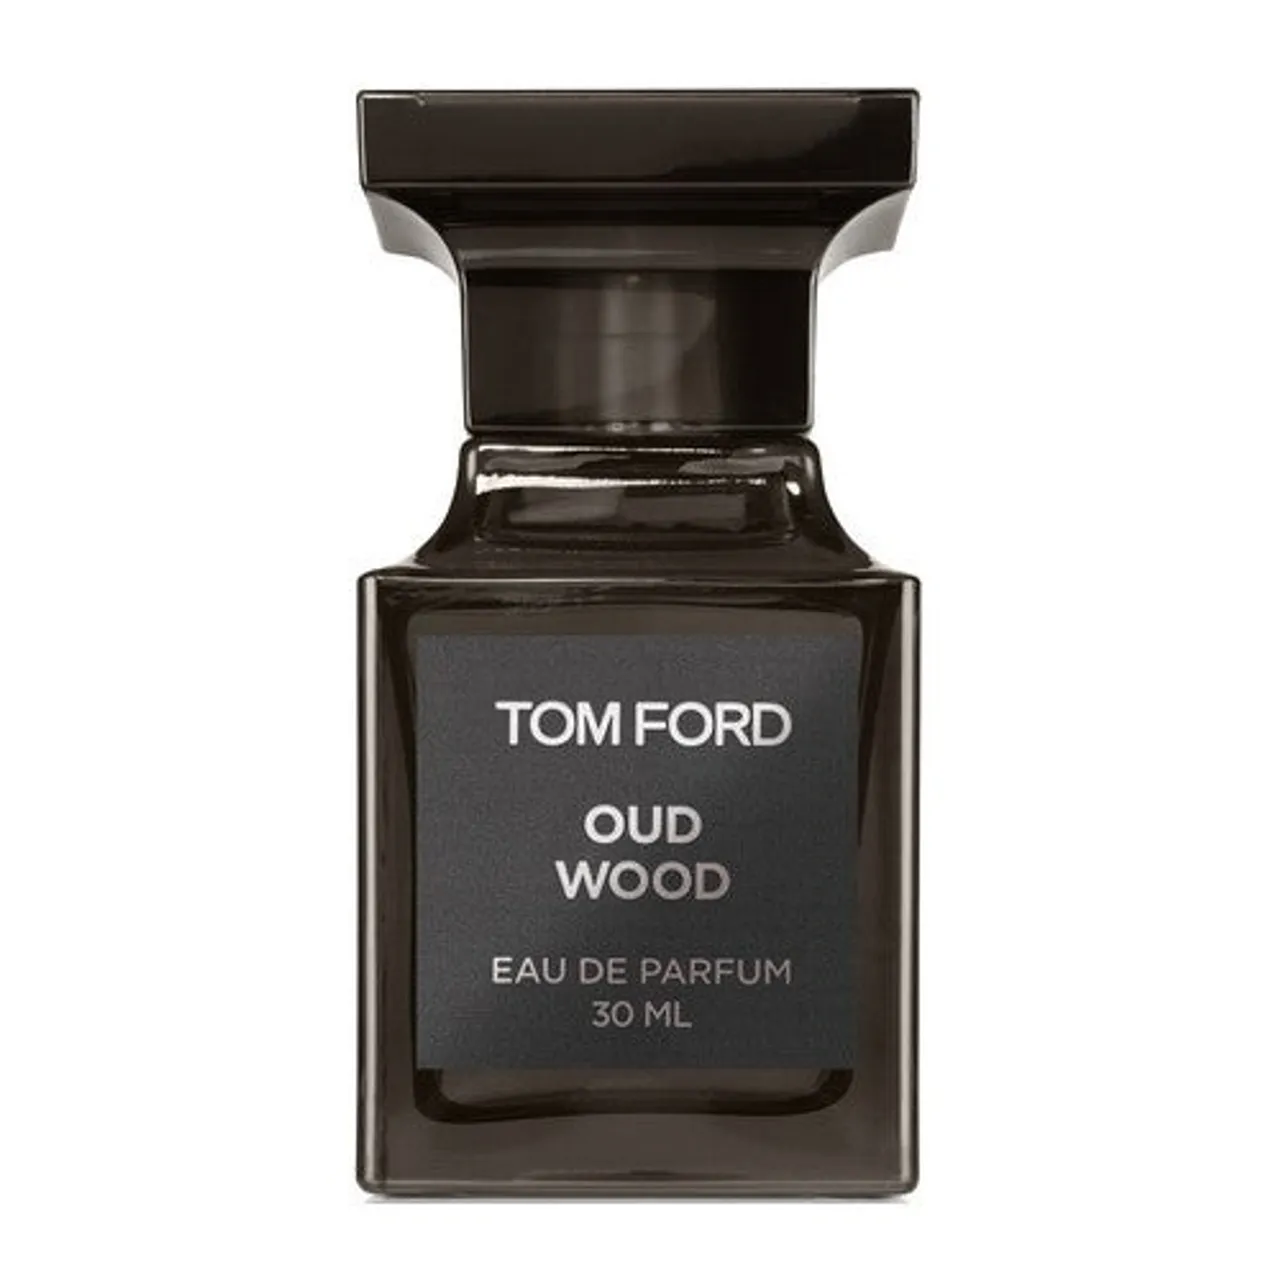 Tom Ford Oud Wood Eau de Parfum 30 ml